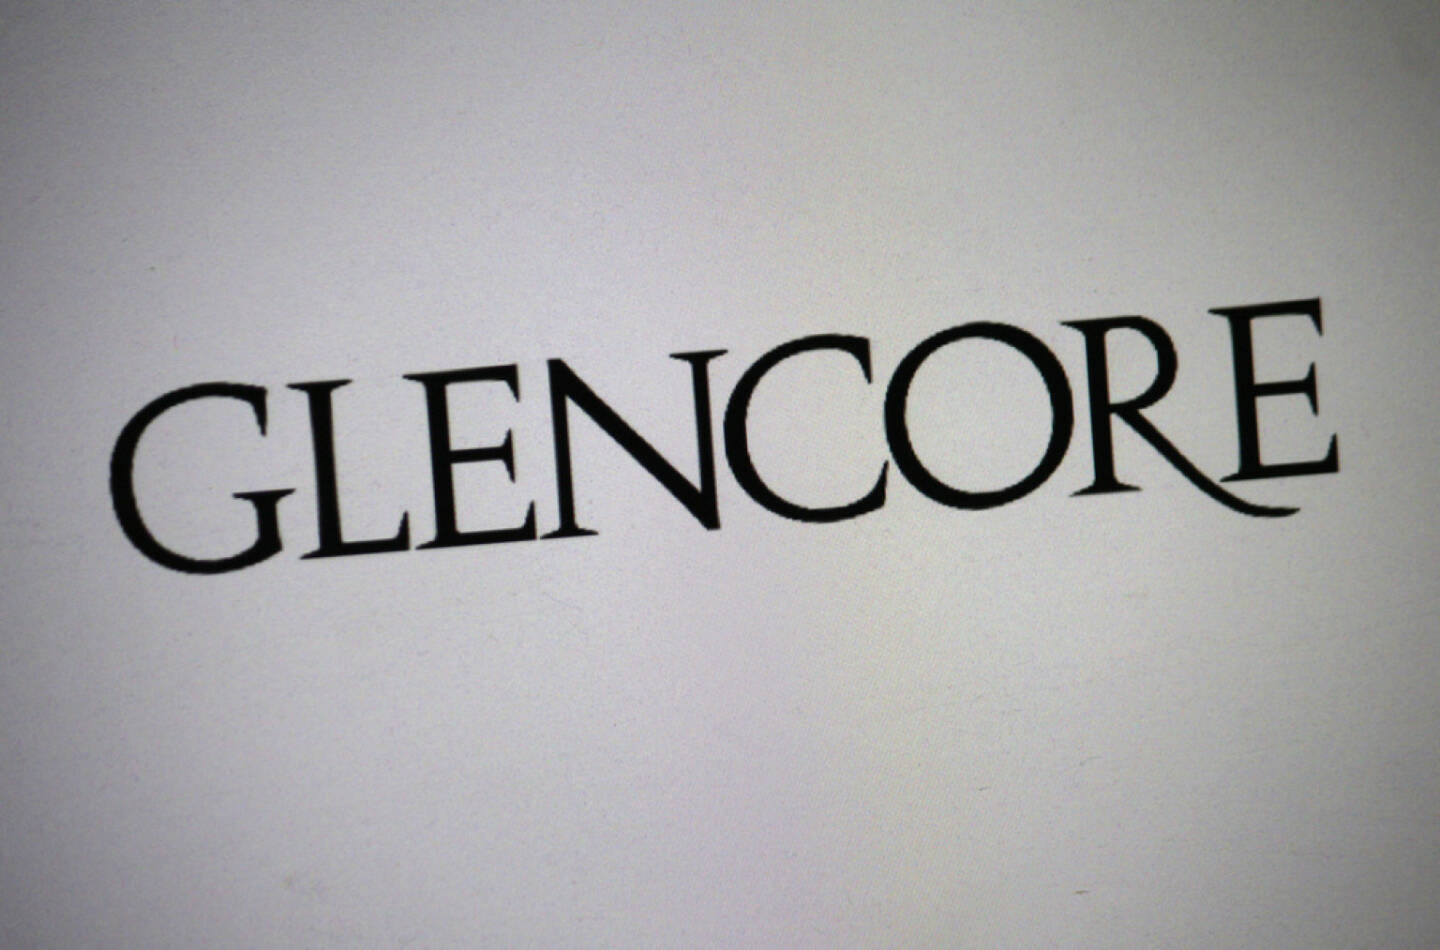 Glencore, <a href=http://www.shutterstock.com/gallery-320989p1.html?cr=00&pl=edit-00>360b</a> / <a href=http://www.shutterstock.com/editorial?cr=00&pl=edit-00>Shutterstock.com</a>, 360b / Shutterstock.com